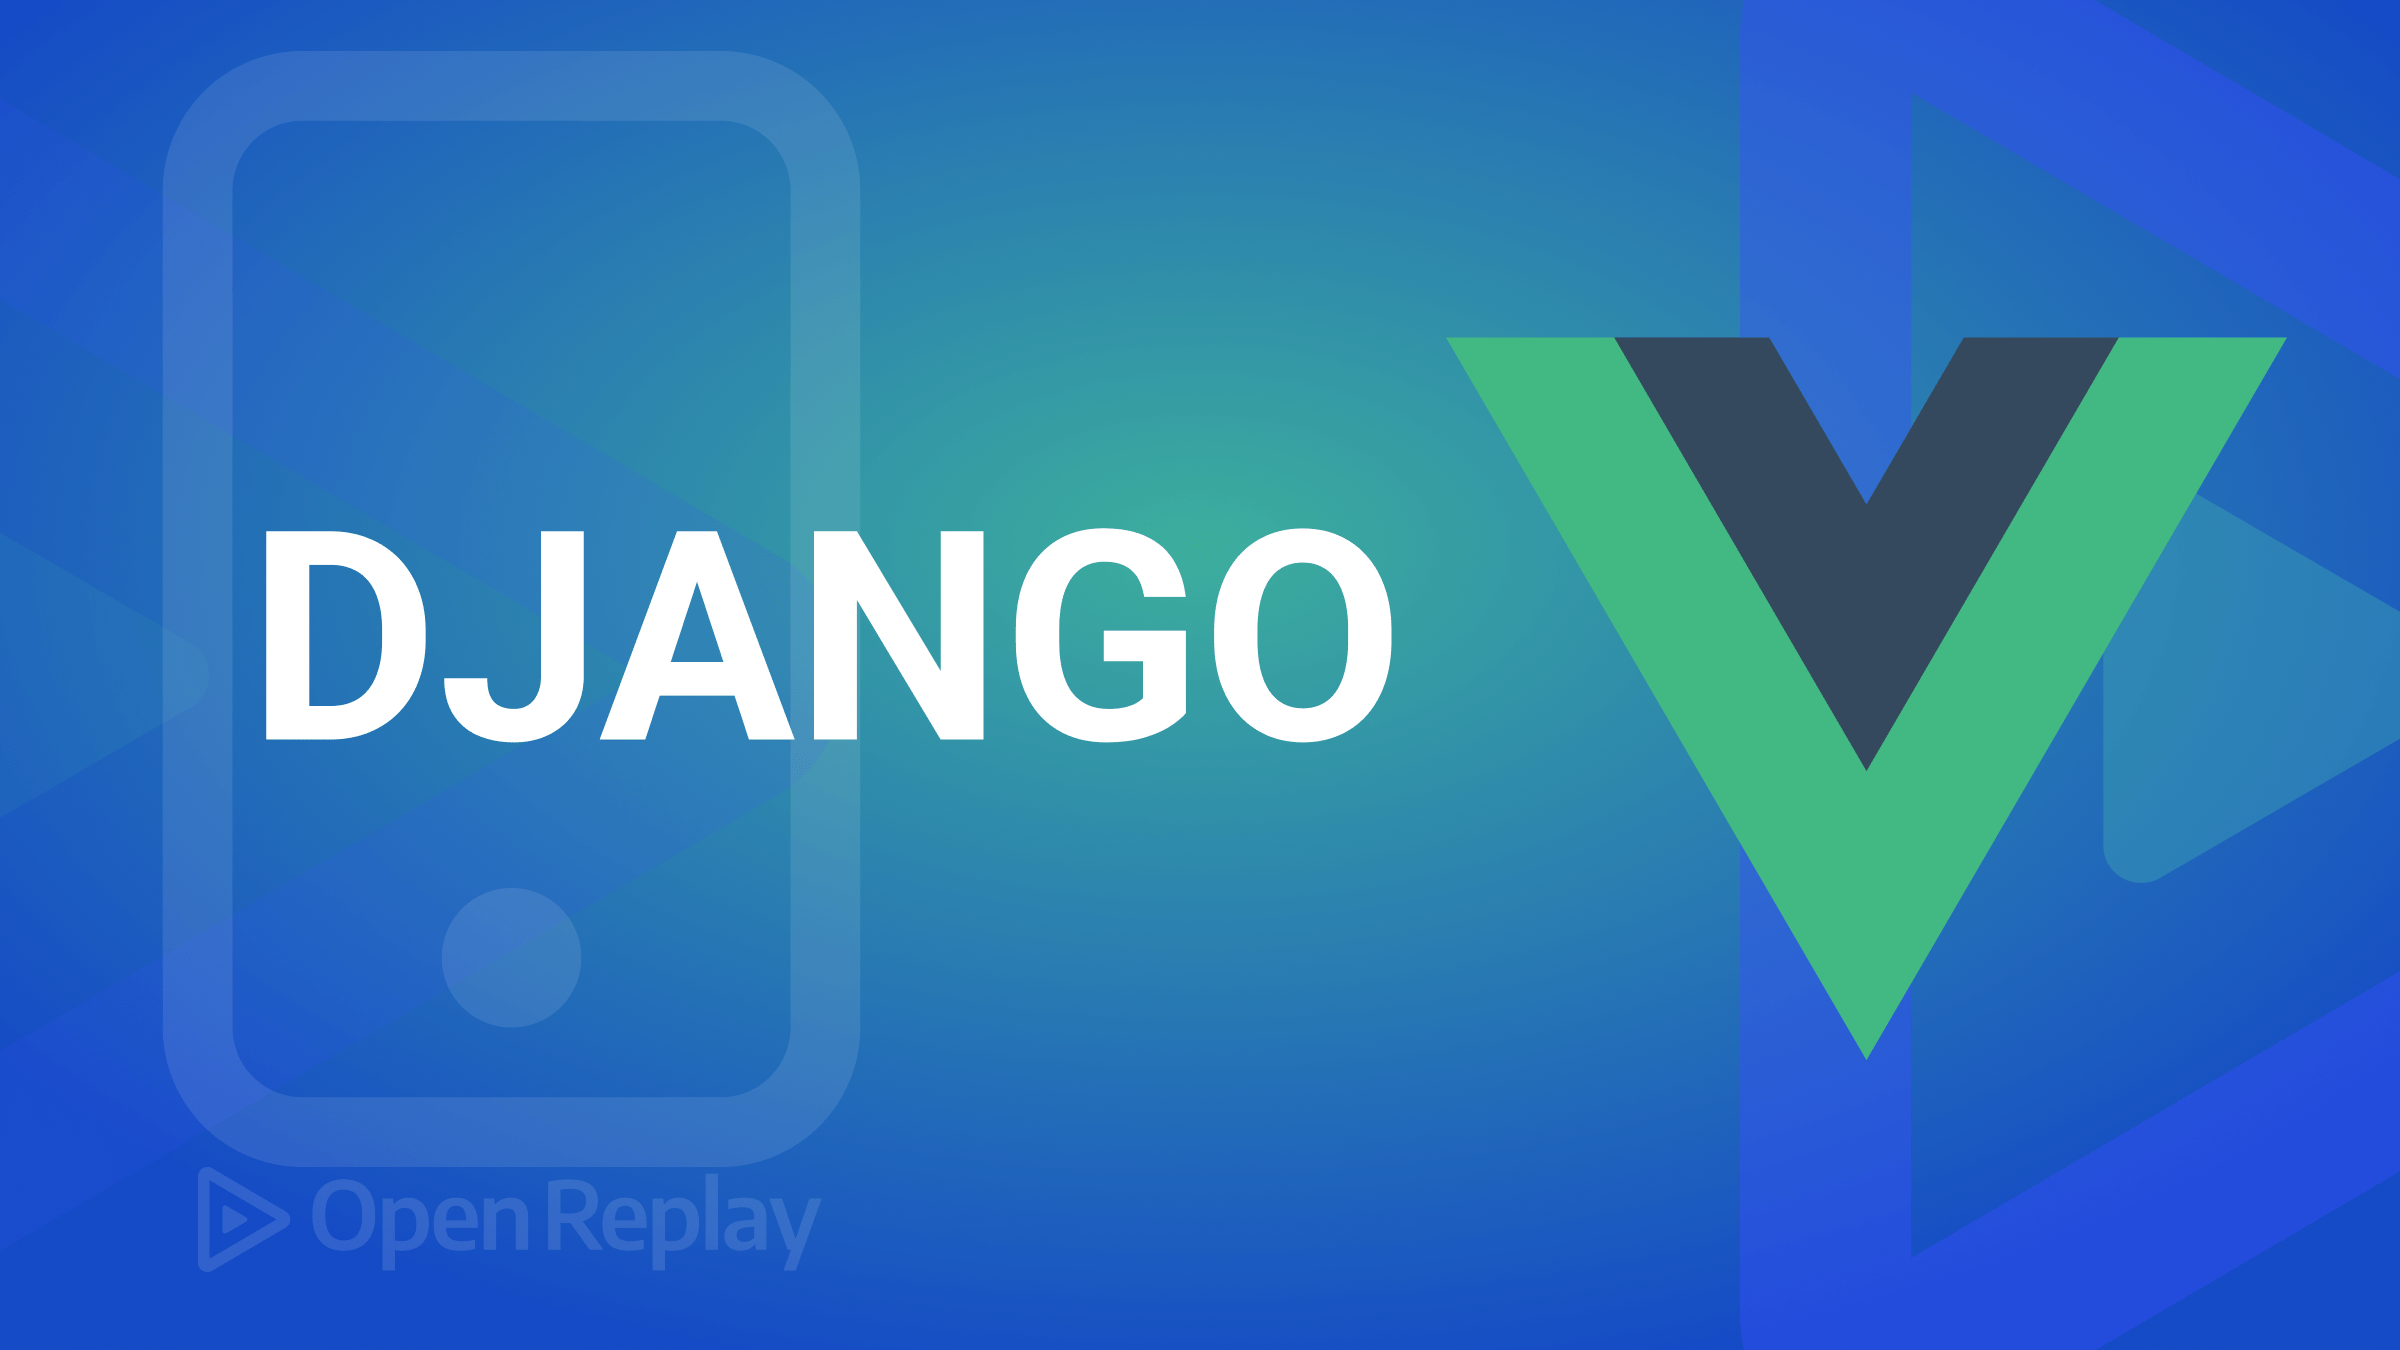 Build an app using Vue and Django